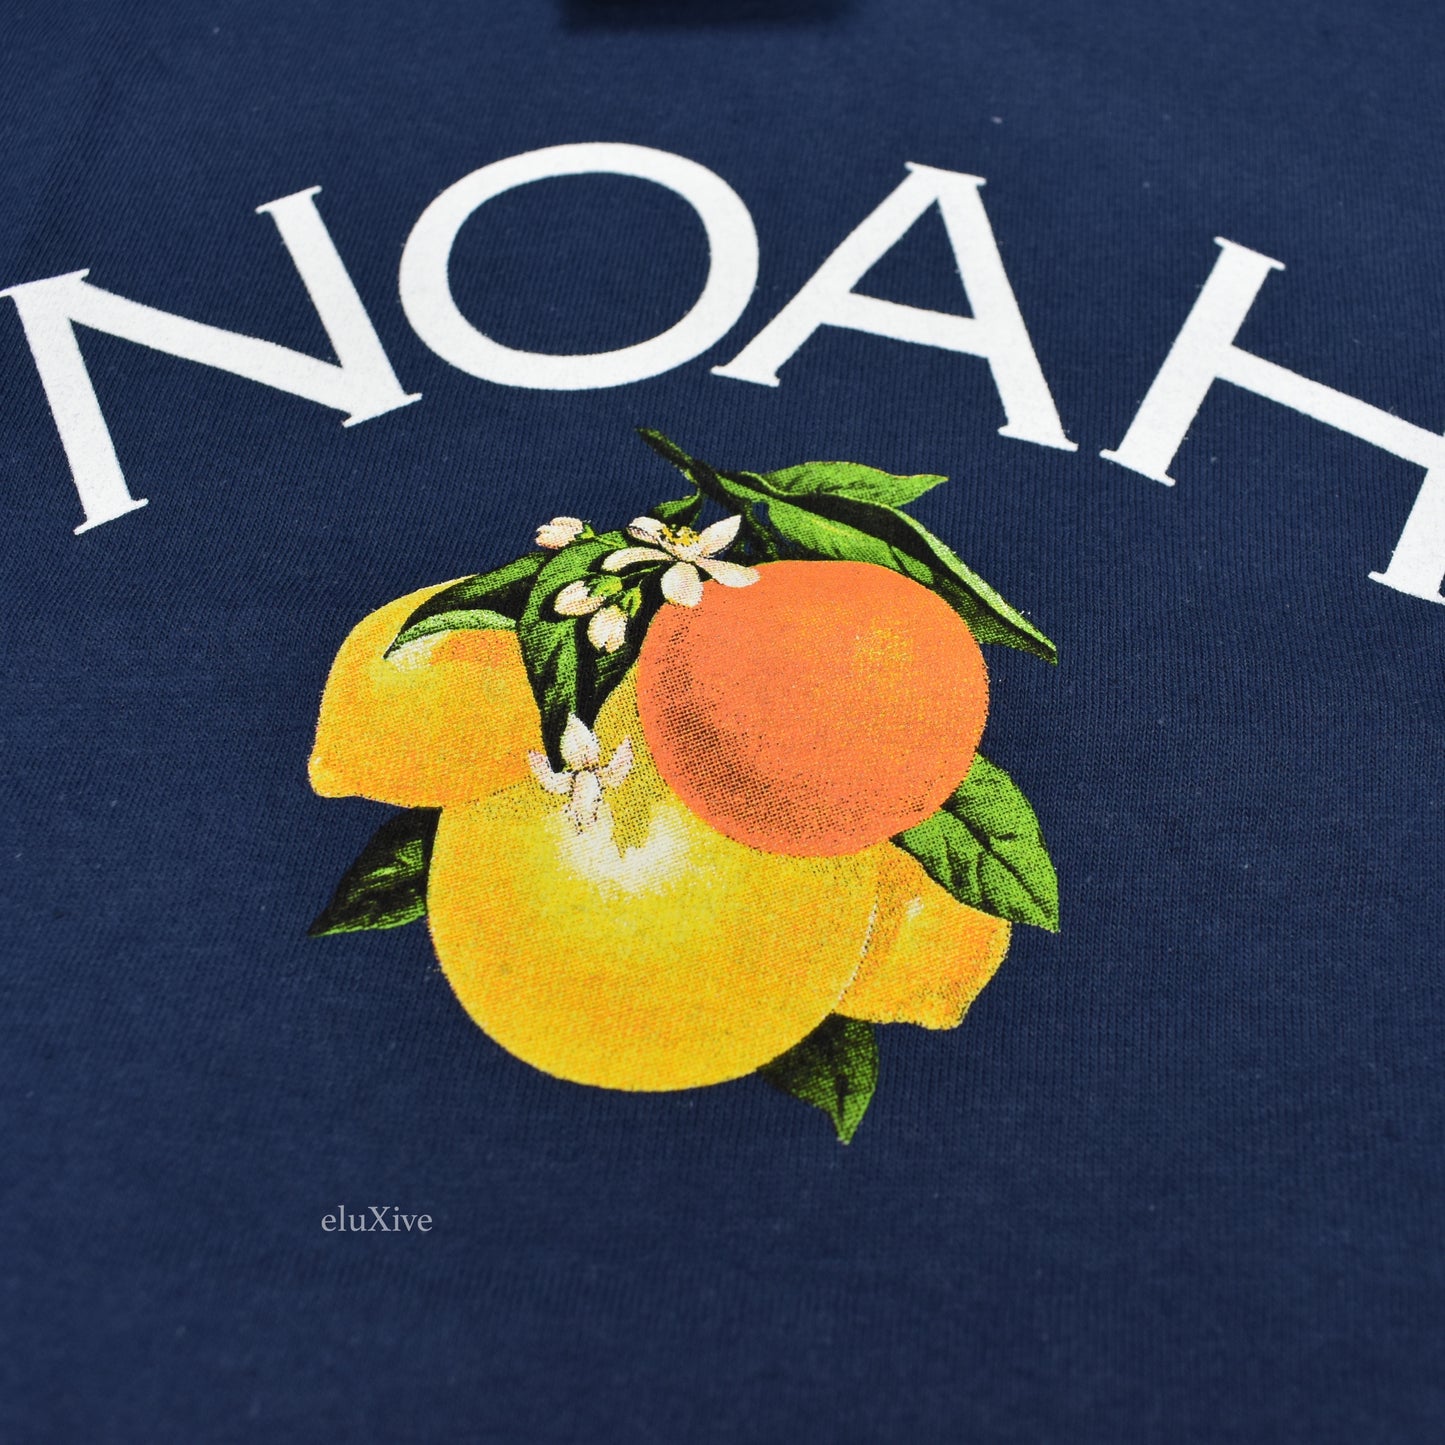 Noah - Citrus Core Logo T-Shirt (Navy)